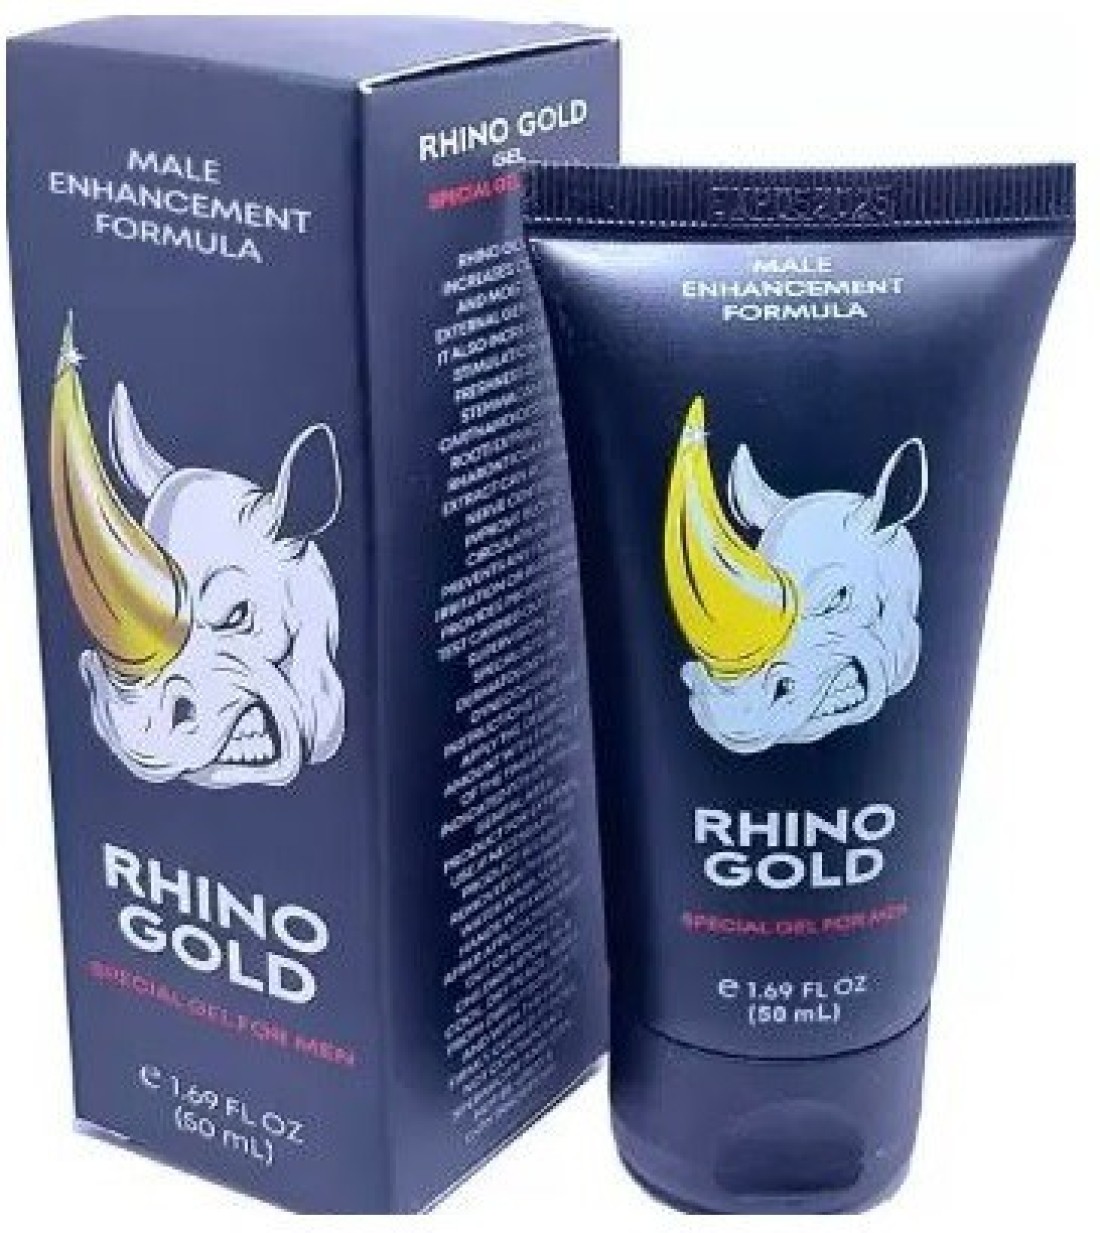 Rahino Gold Gel For Men